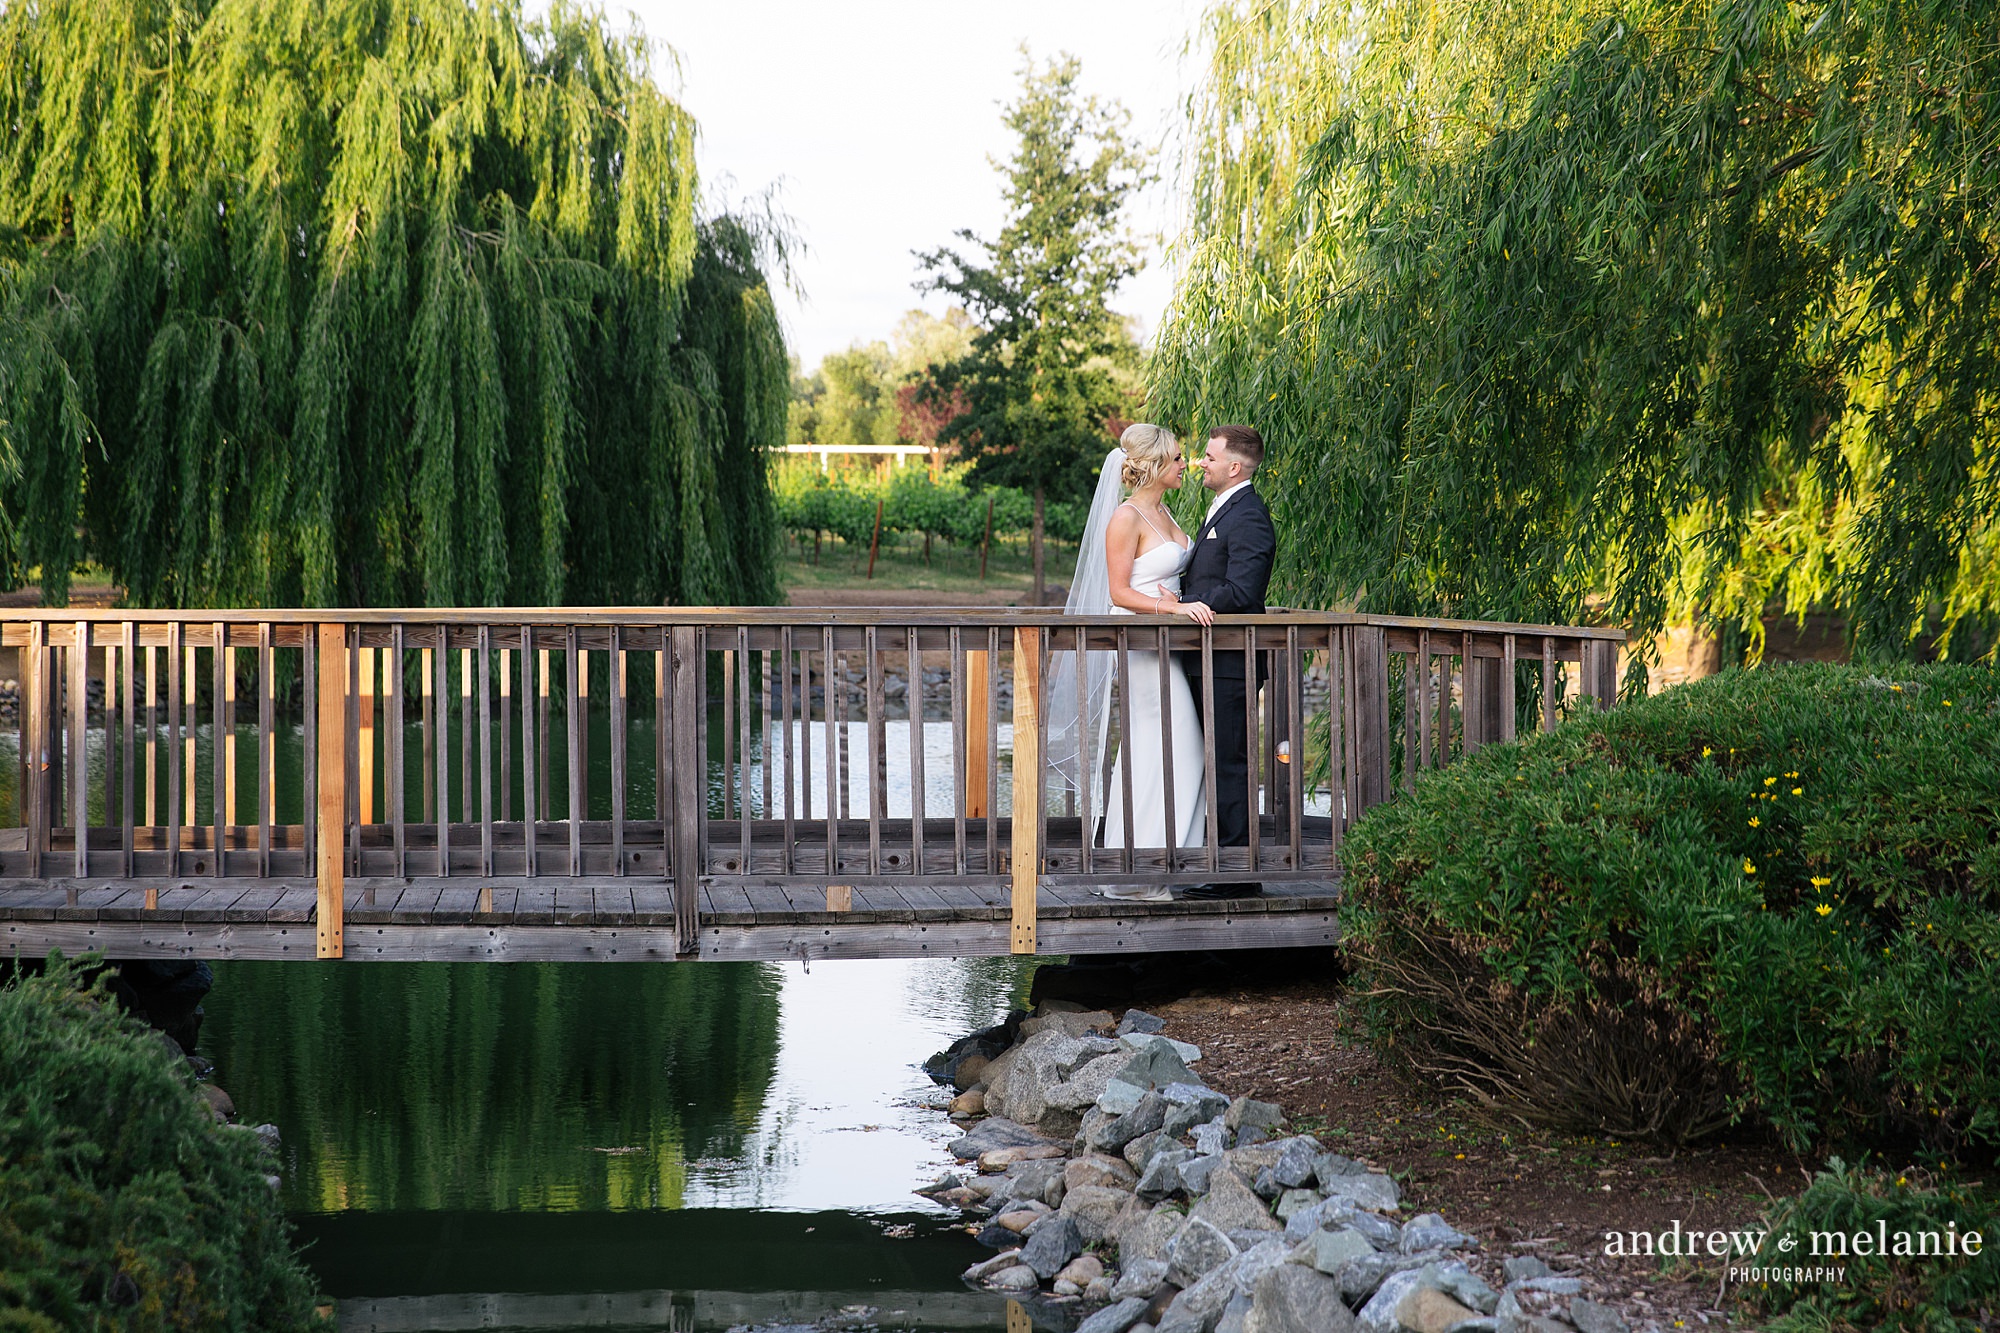 Wolfe Heights Event Center in Sacramento, CA. Spring wedding photos on bridge overlooking pond